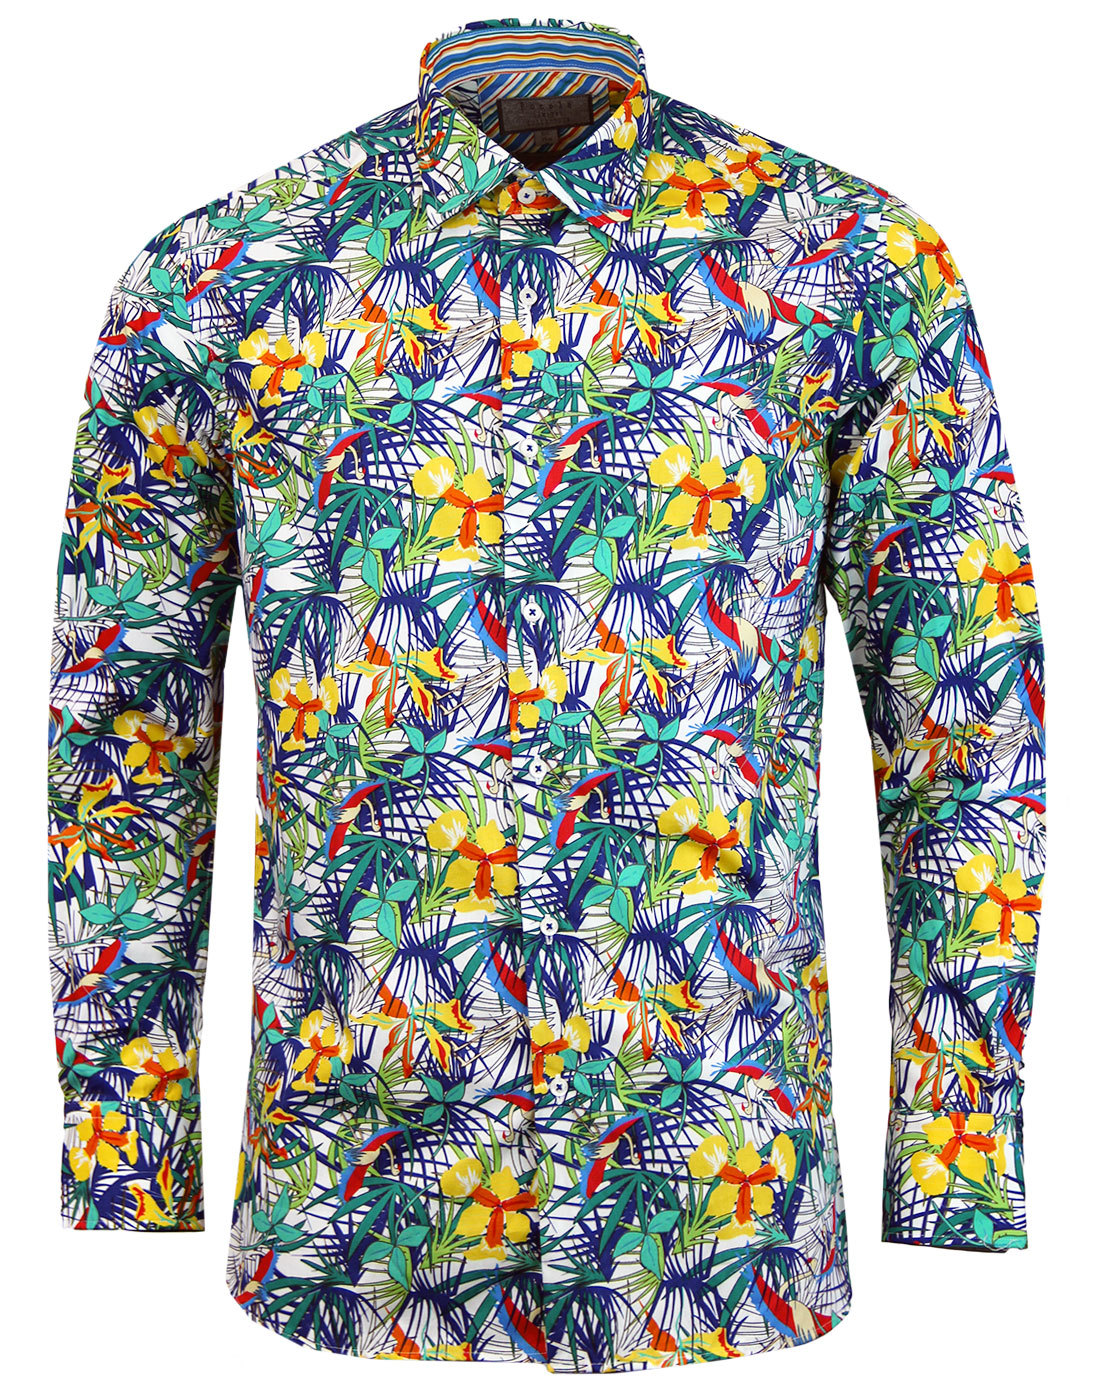 ROCOLA Men's Retro 1970s Psychedelic Tropical Floral Print Shirt